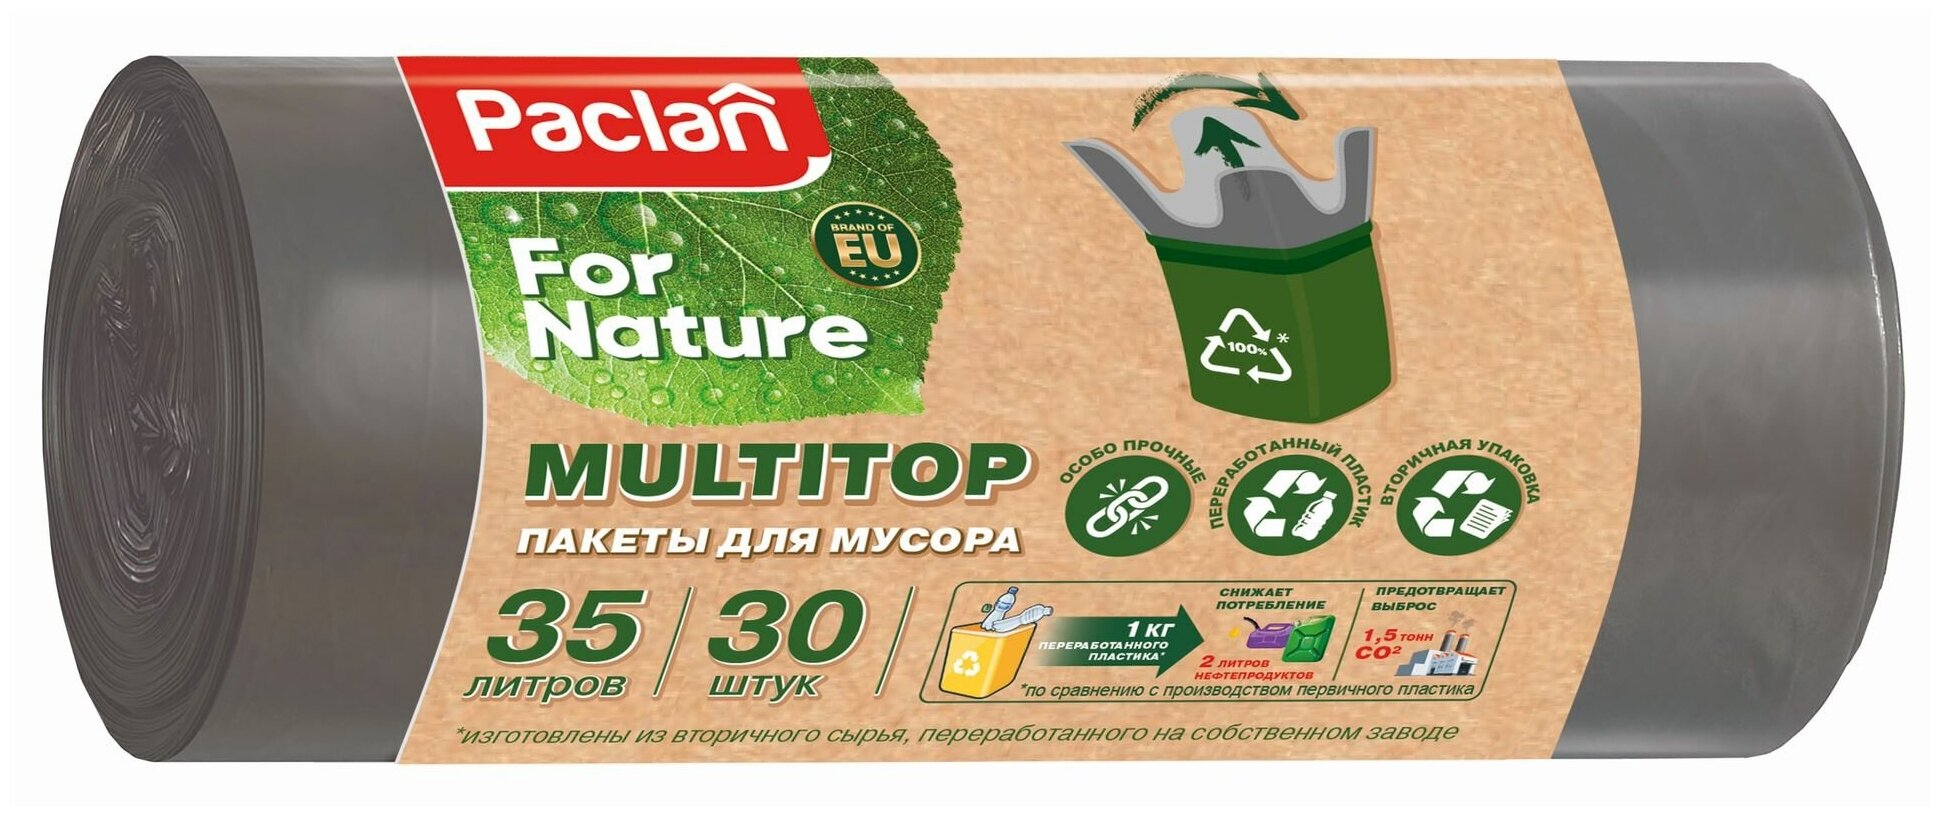 Пакеты для мусора Paclan Multitop 30шт*35л - фото №4